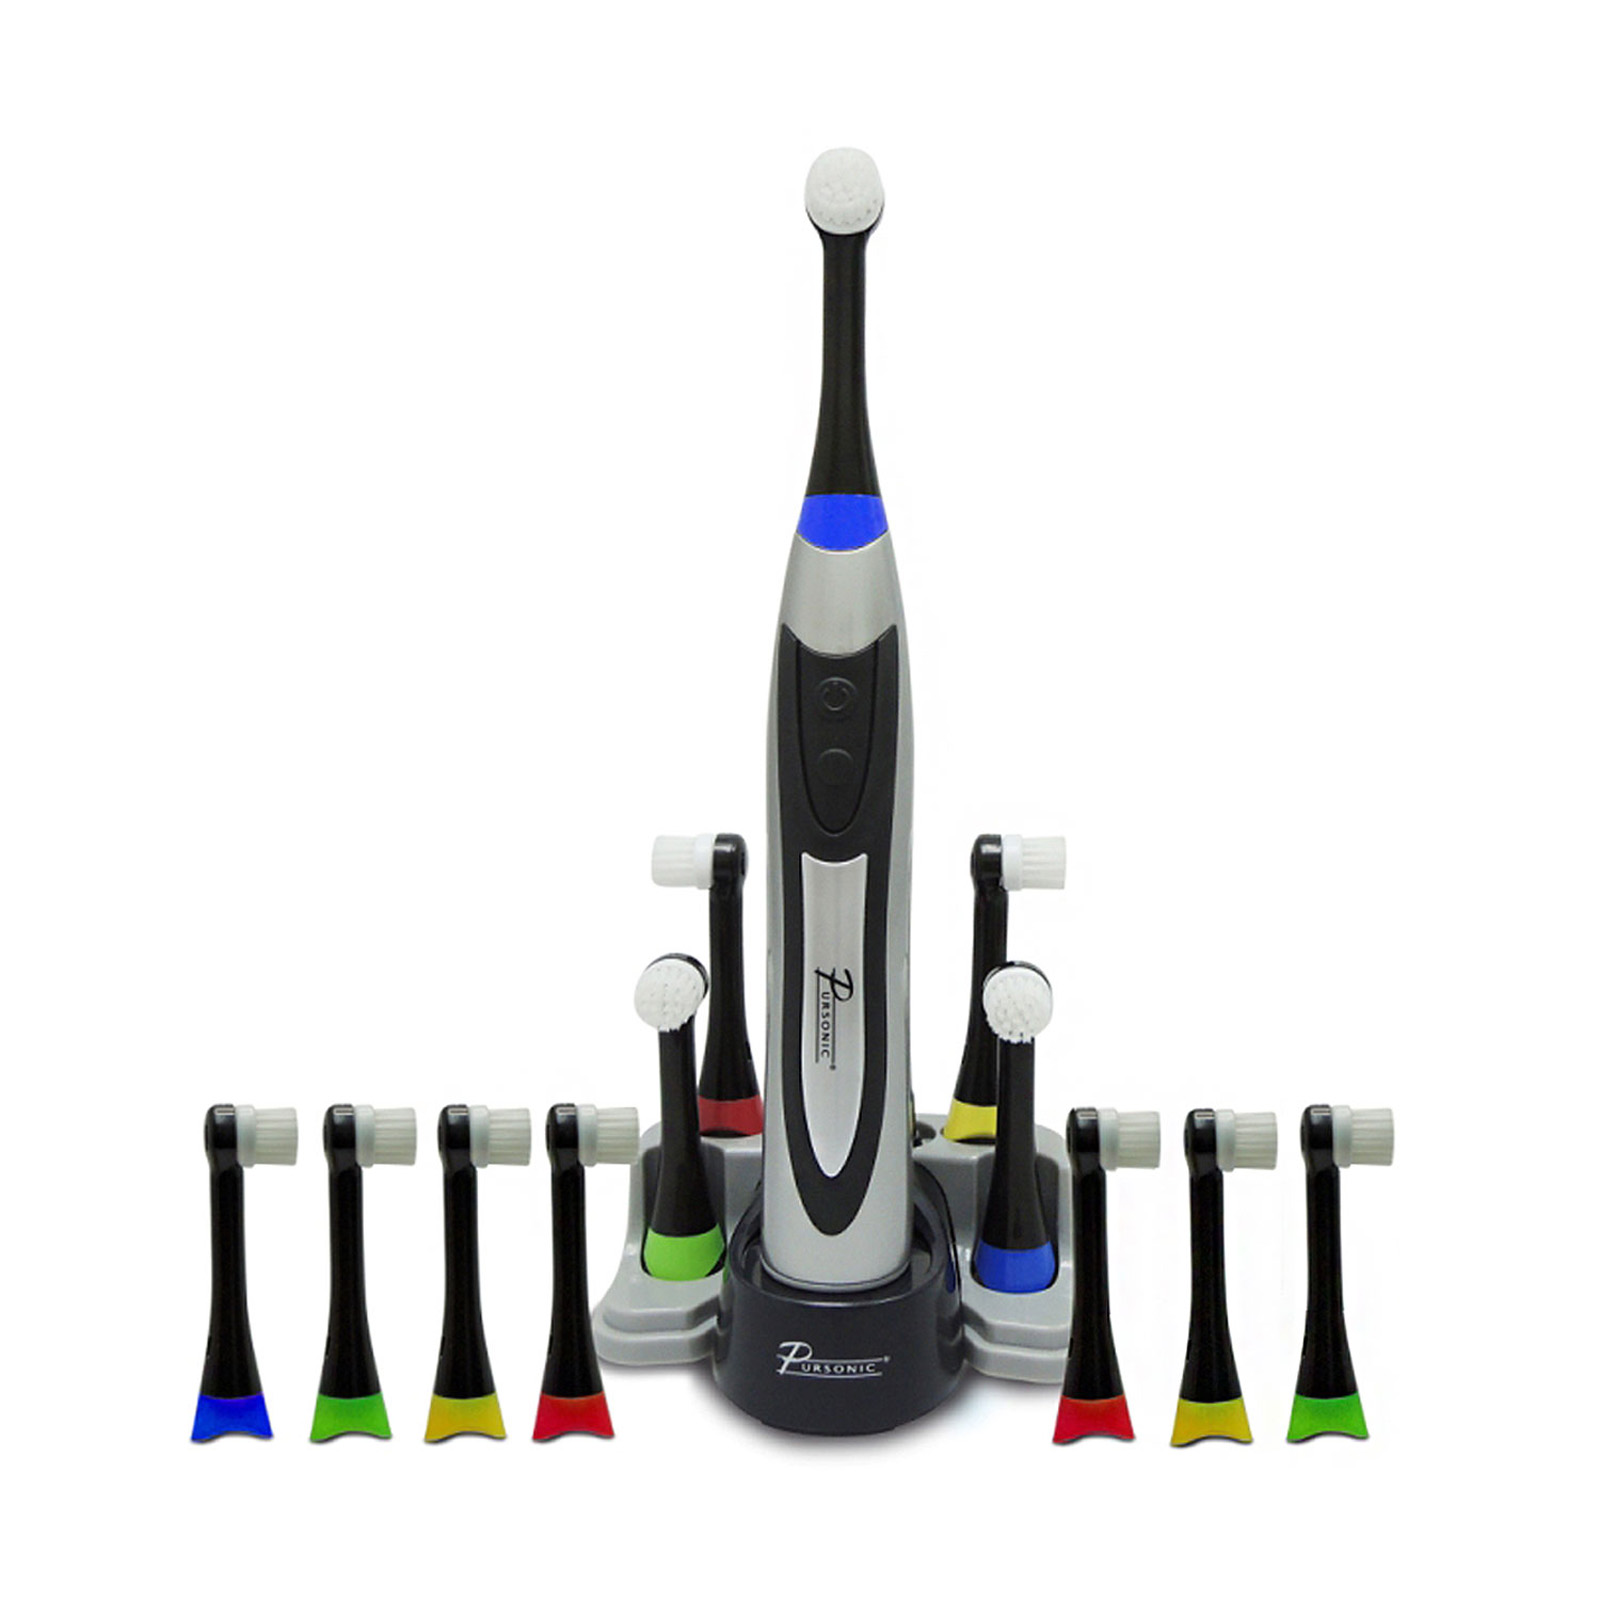 Pursonic Deluxe Plus Rechargeable Toothbrush w/ Bonus 12 Brush Heads